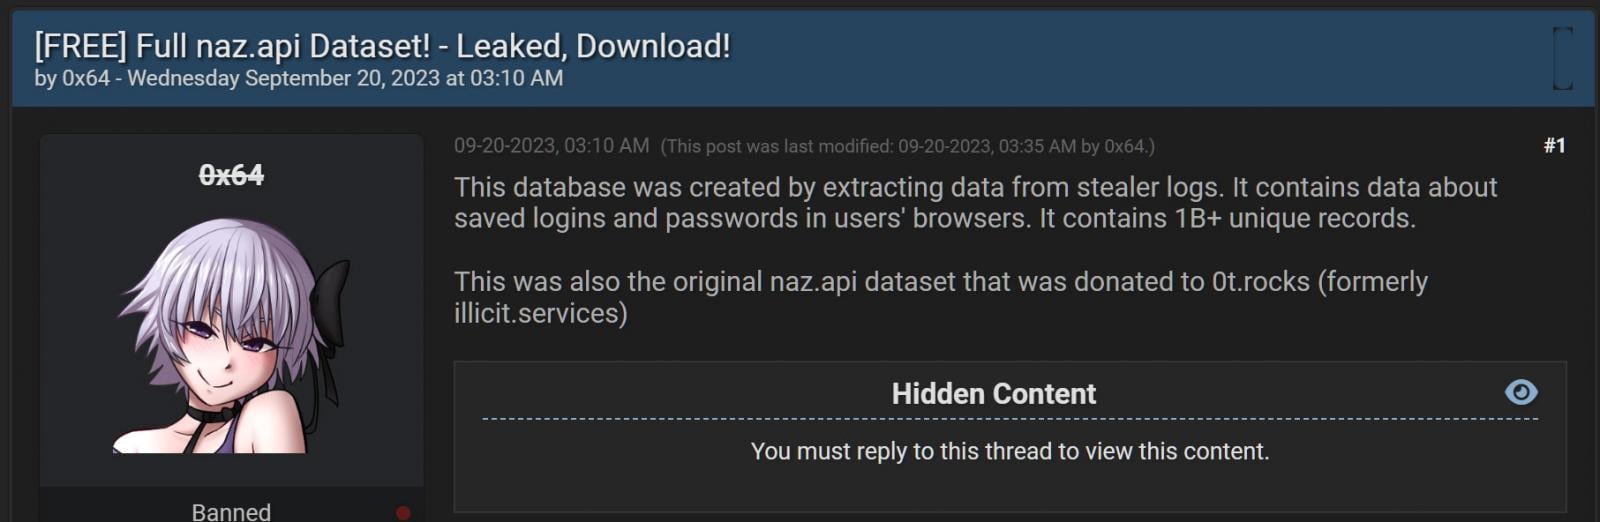 Threat actors sharing the Naz.API dataset on hacking forums